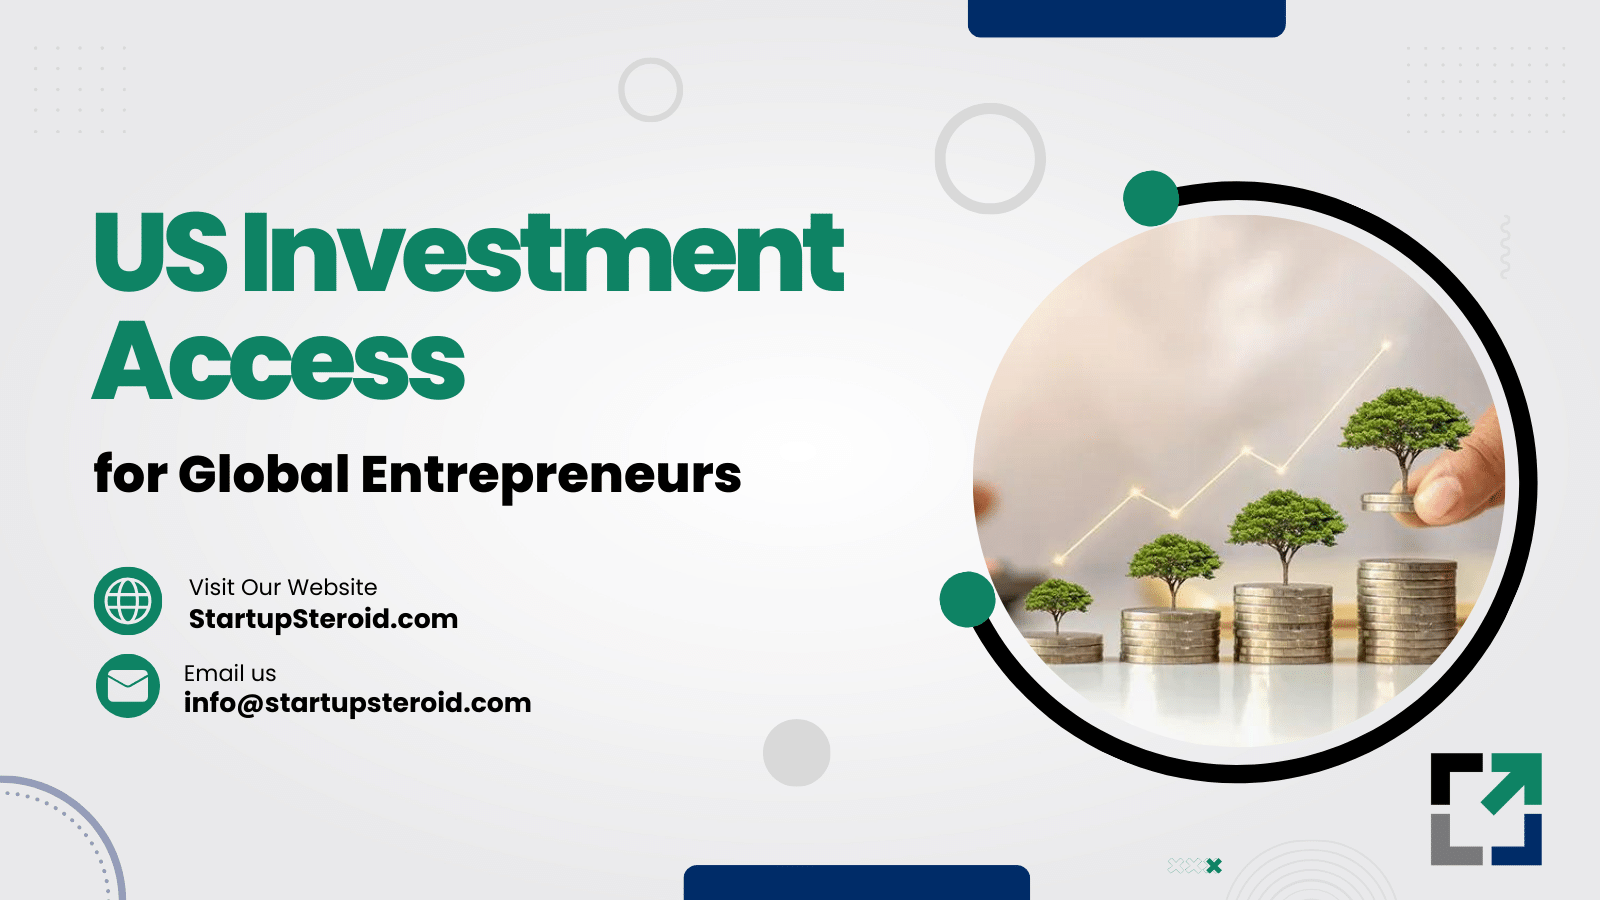 US Investment Access for Global Entrepreneurs